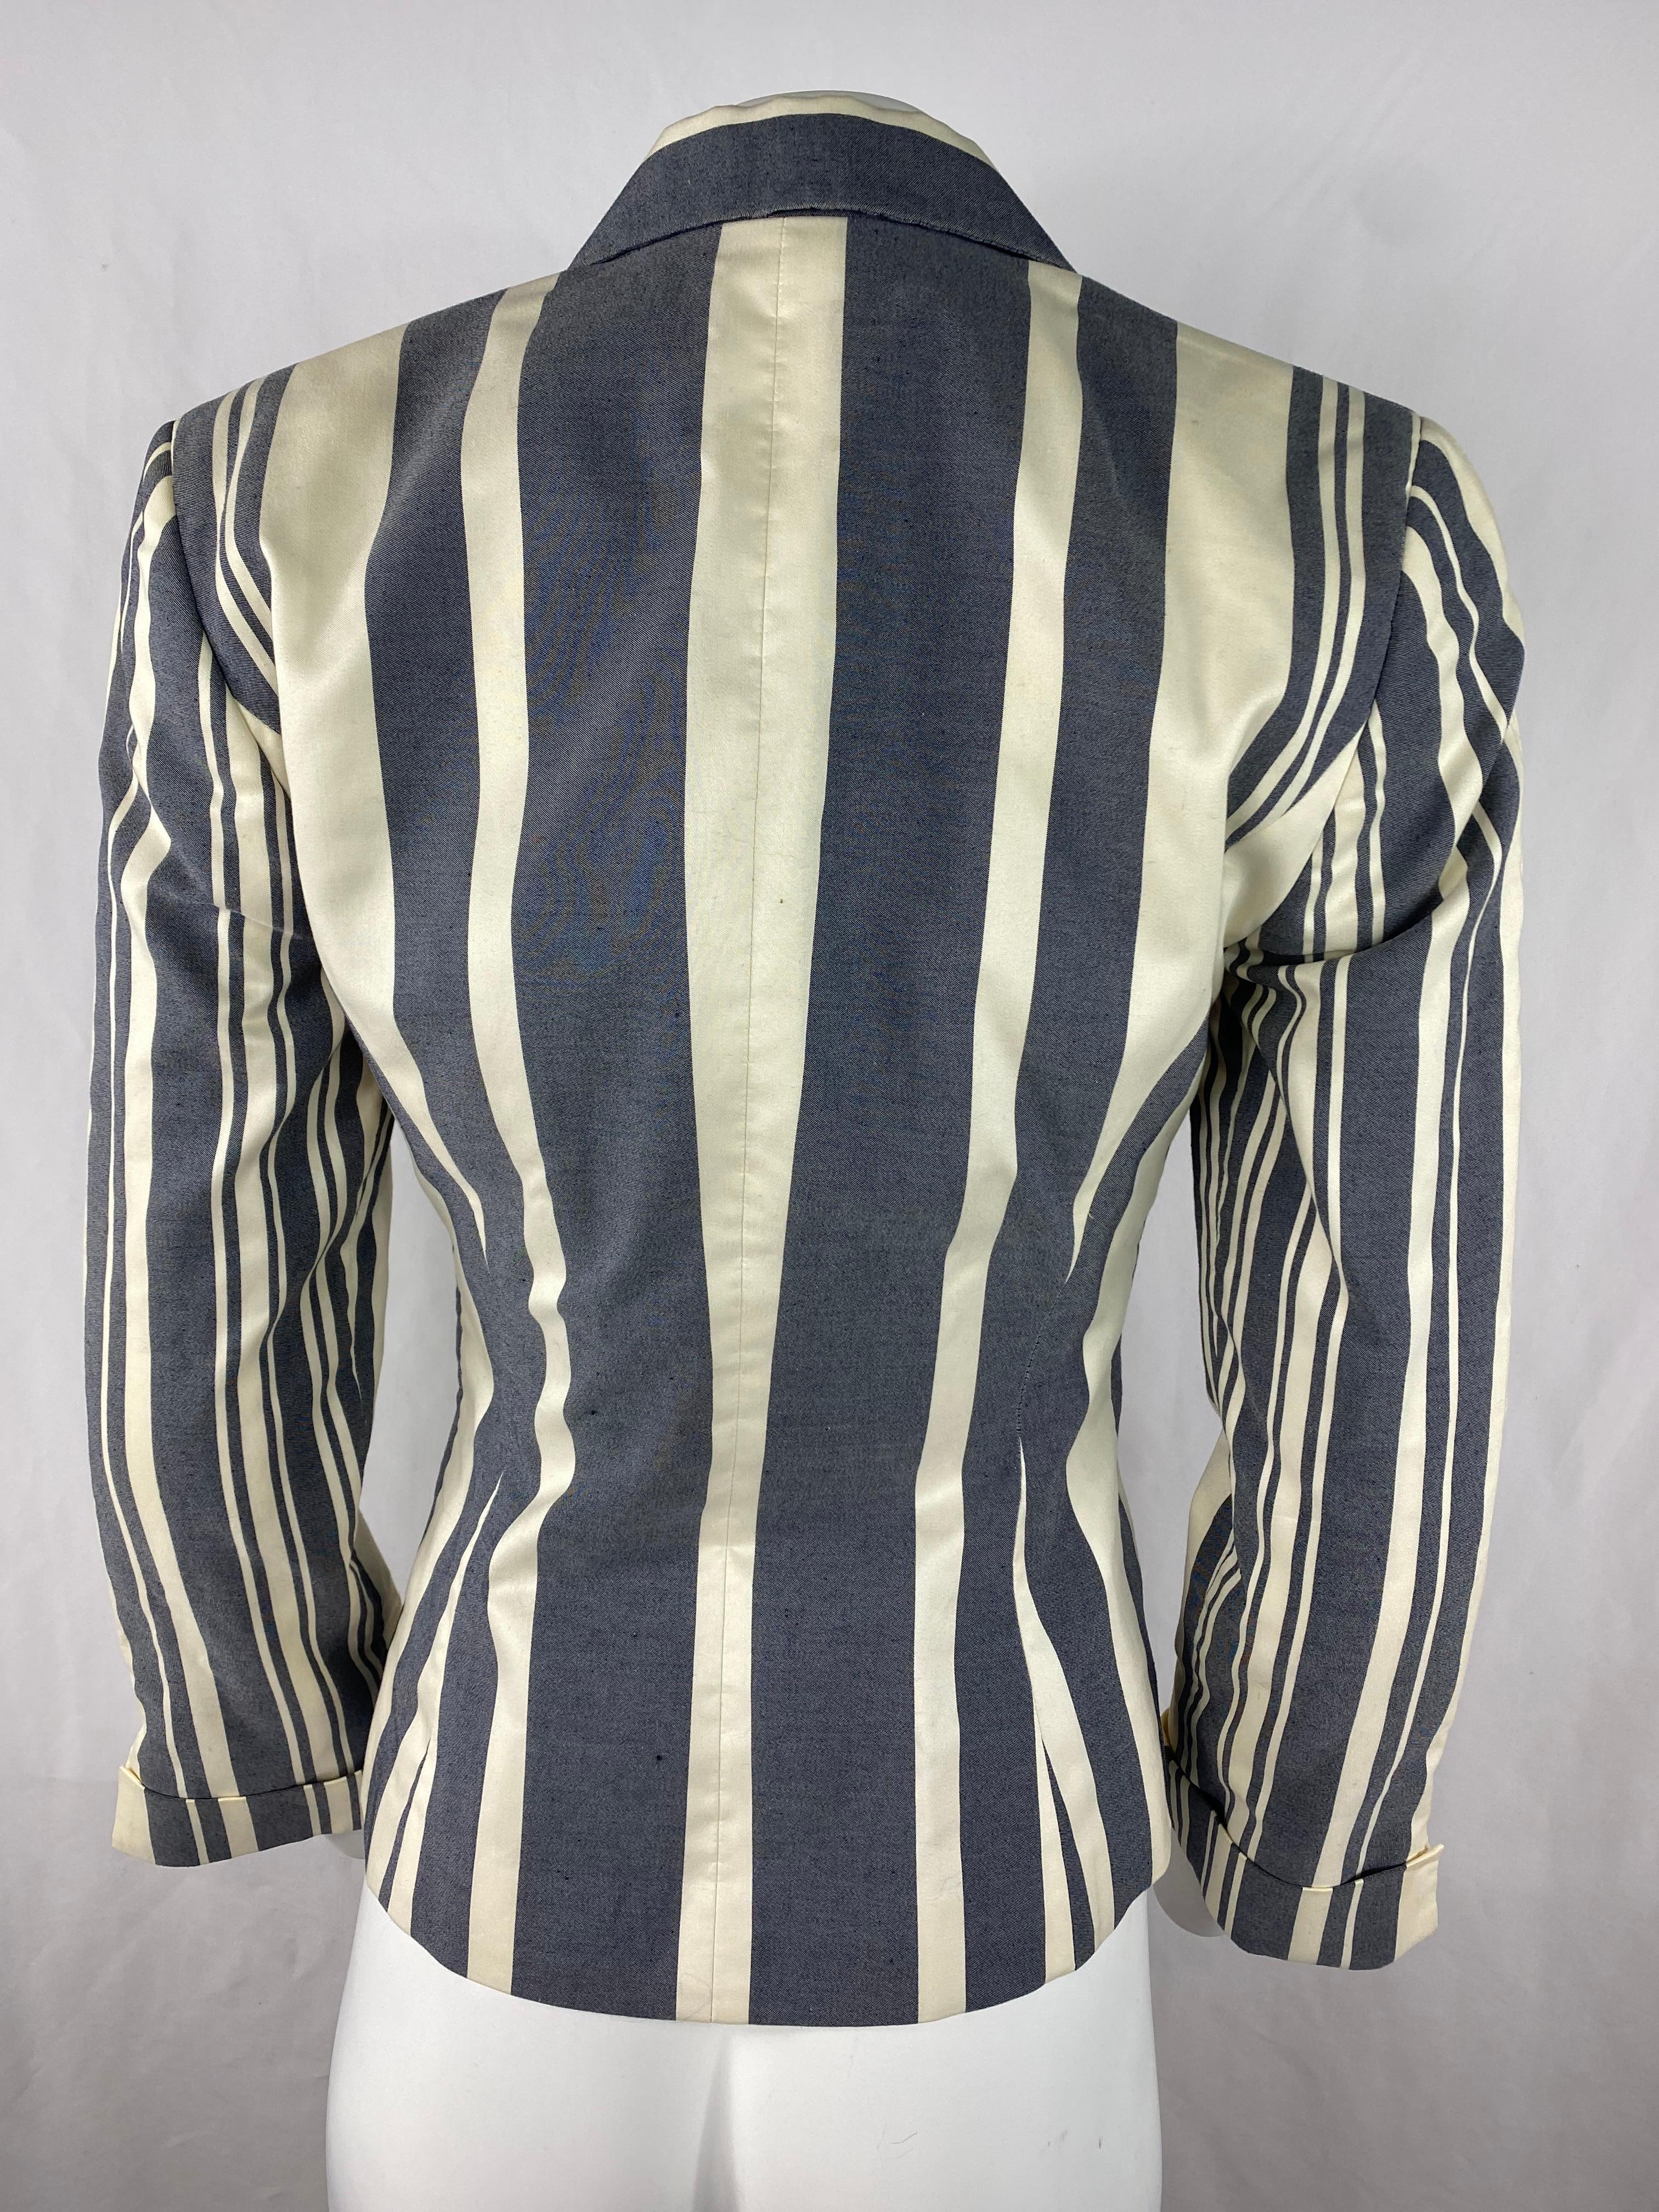 Carolina Herrera - Veste blazer blanche et bleue, taille 6 Pour femmes en vente